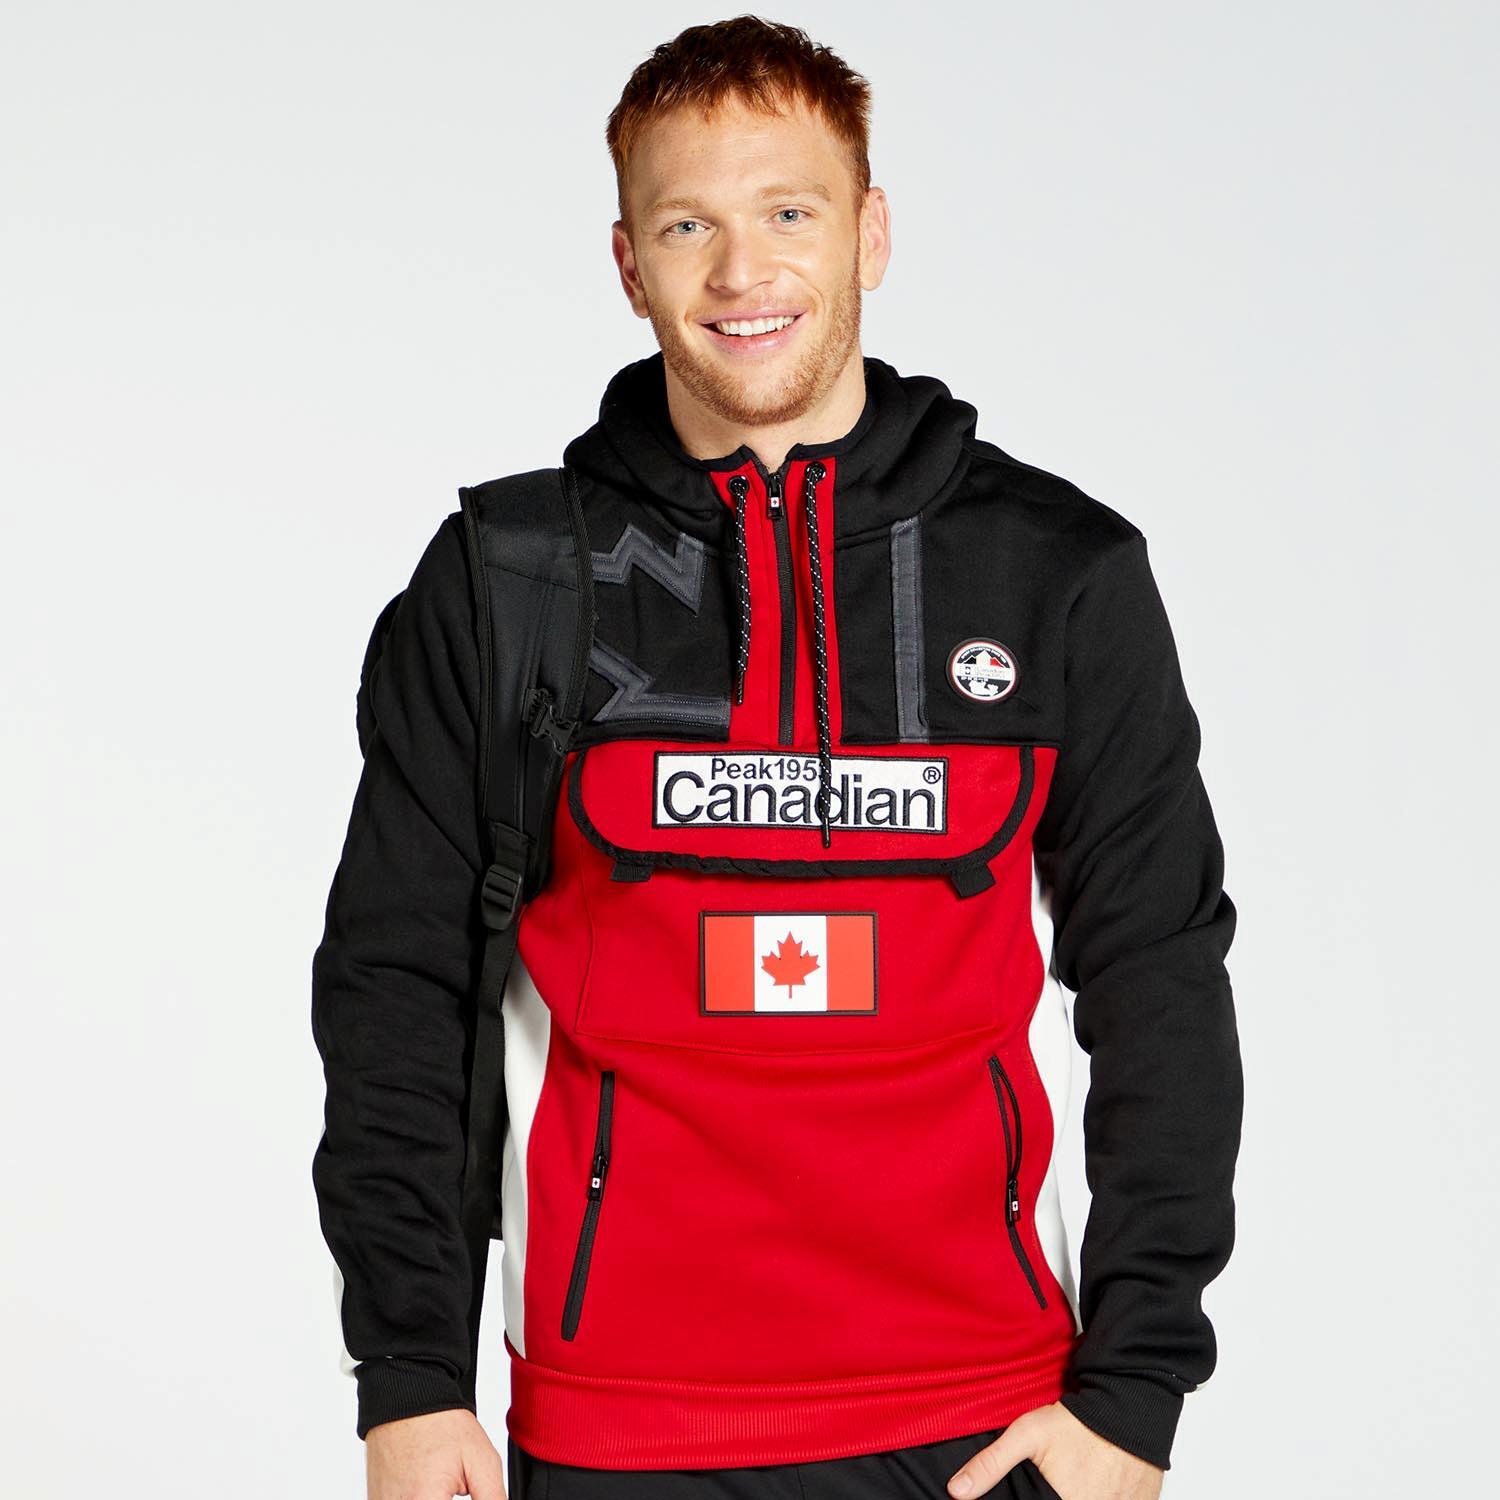 Canadian Peak Fitateak - Rouge - Sweat à Capuche Homme sports taille XL